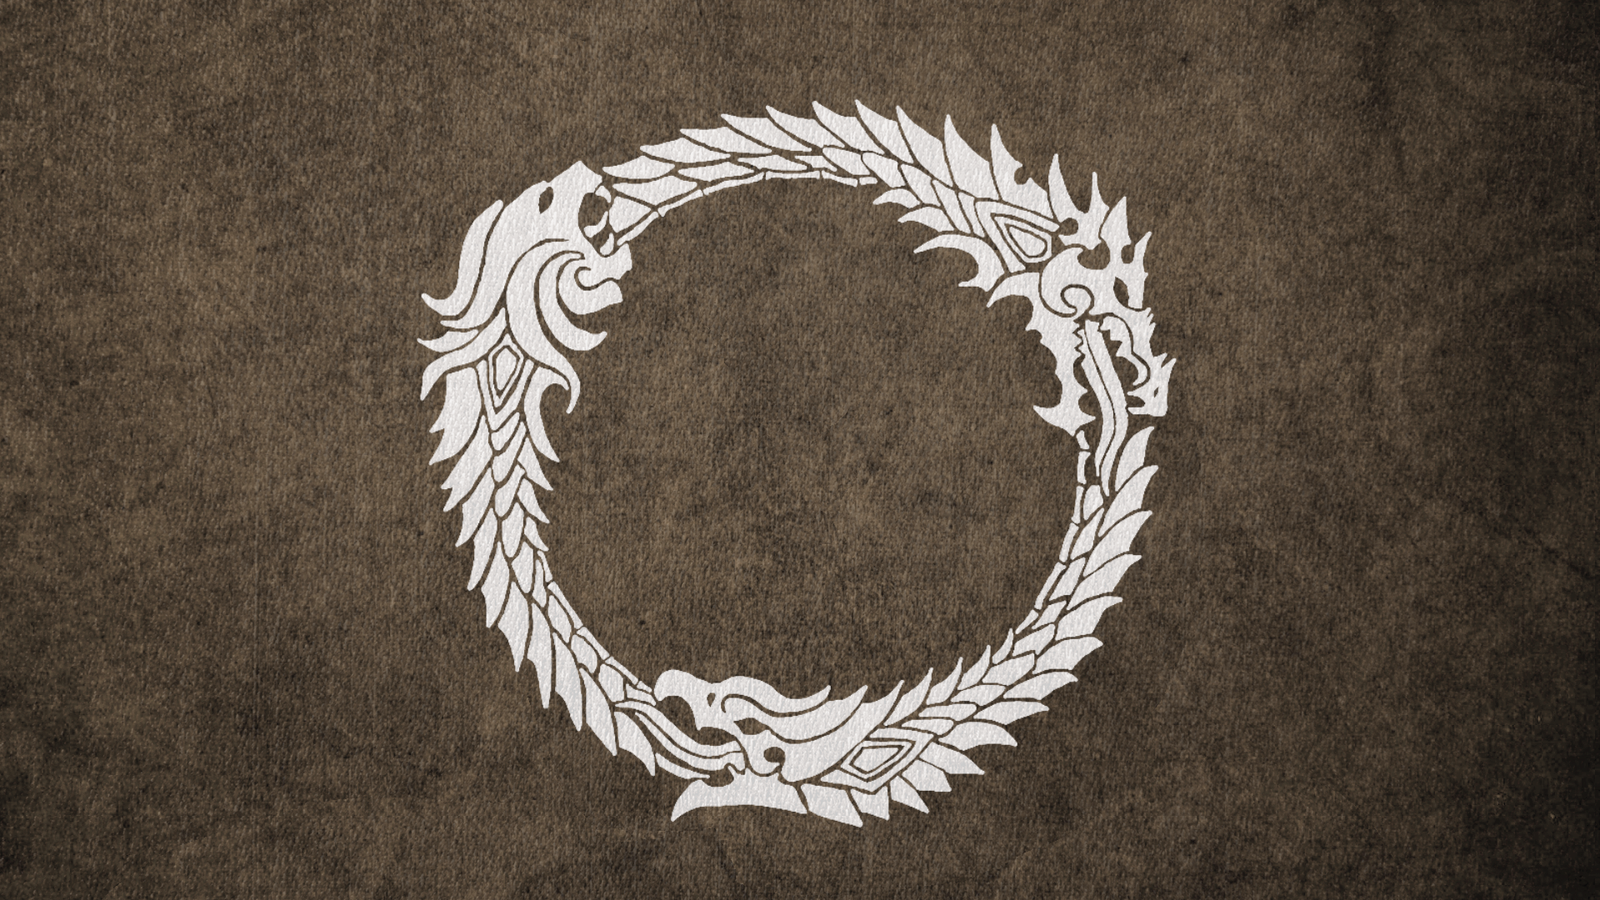 The Elder Scrolls: Flag of the Three Alliances by okiir